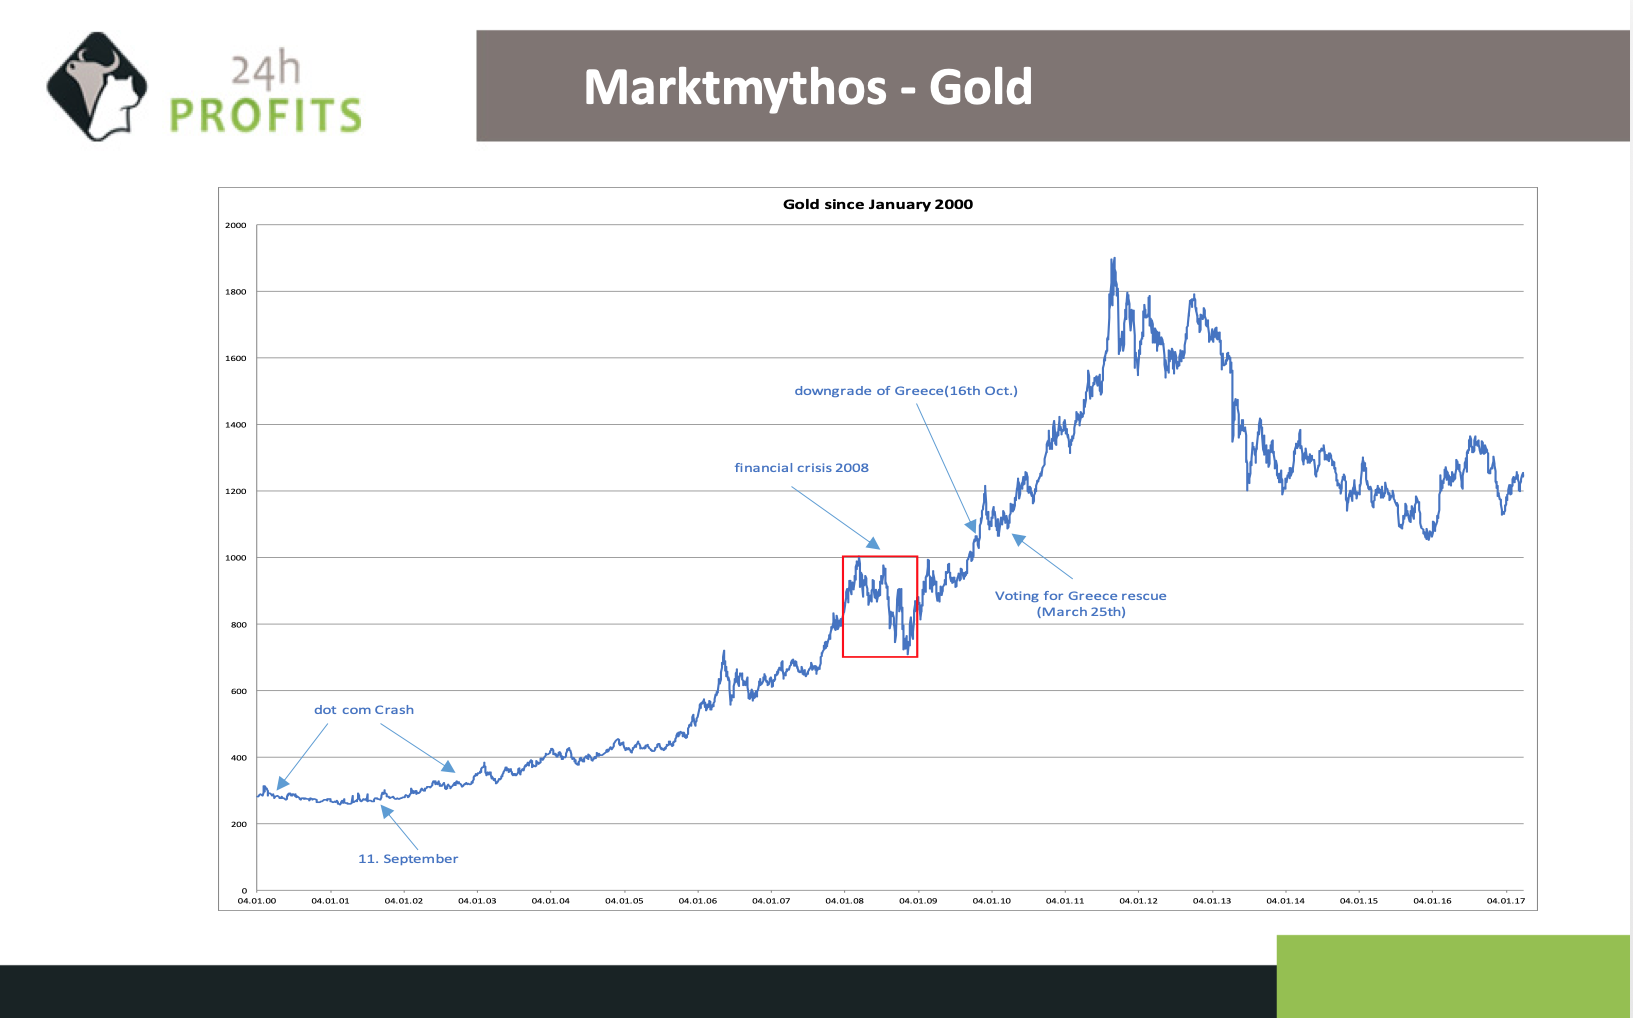 Gold stock market myth - dispelling a stock market myth - stock market tip - trading gold